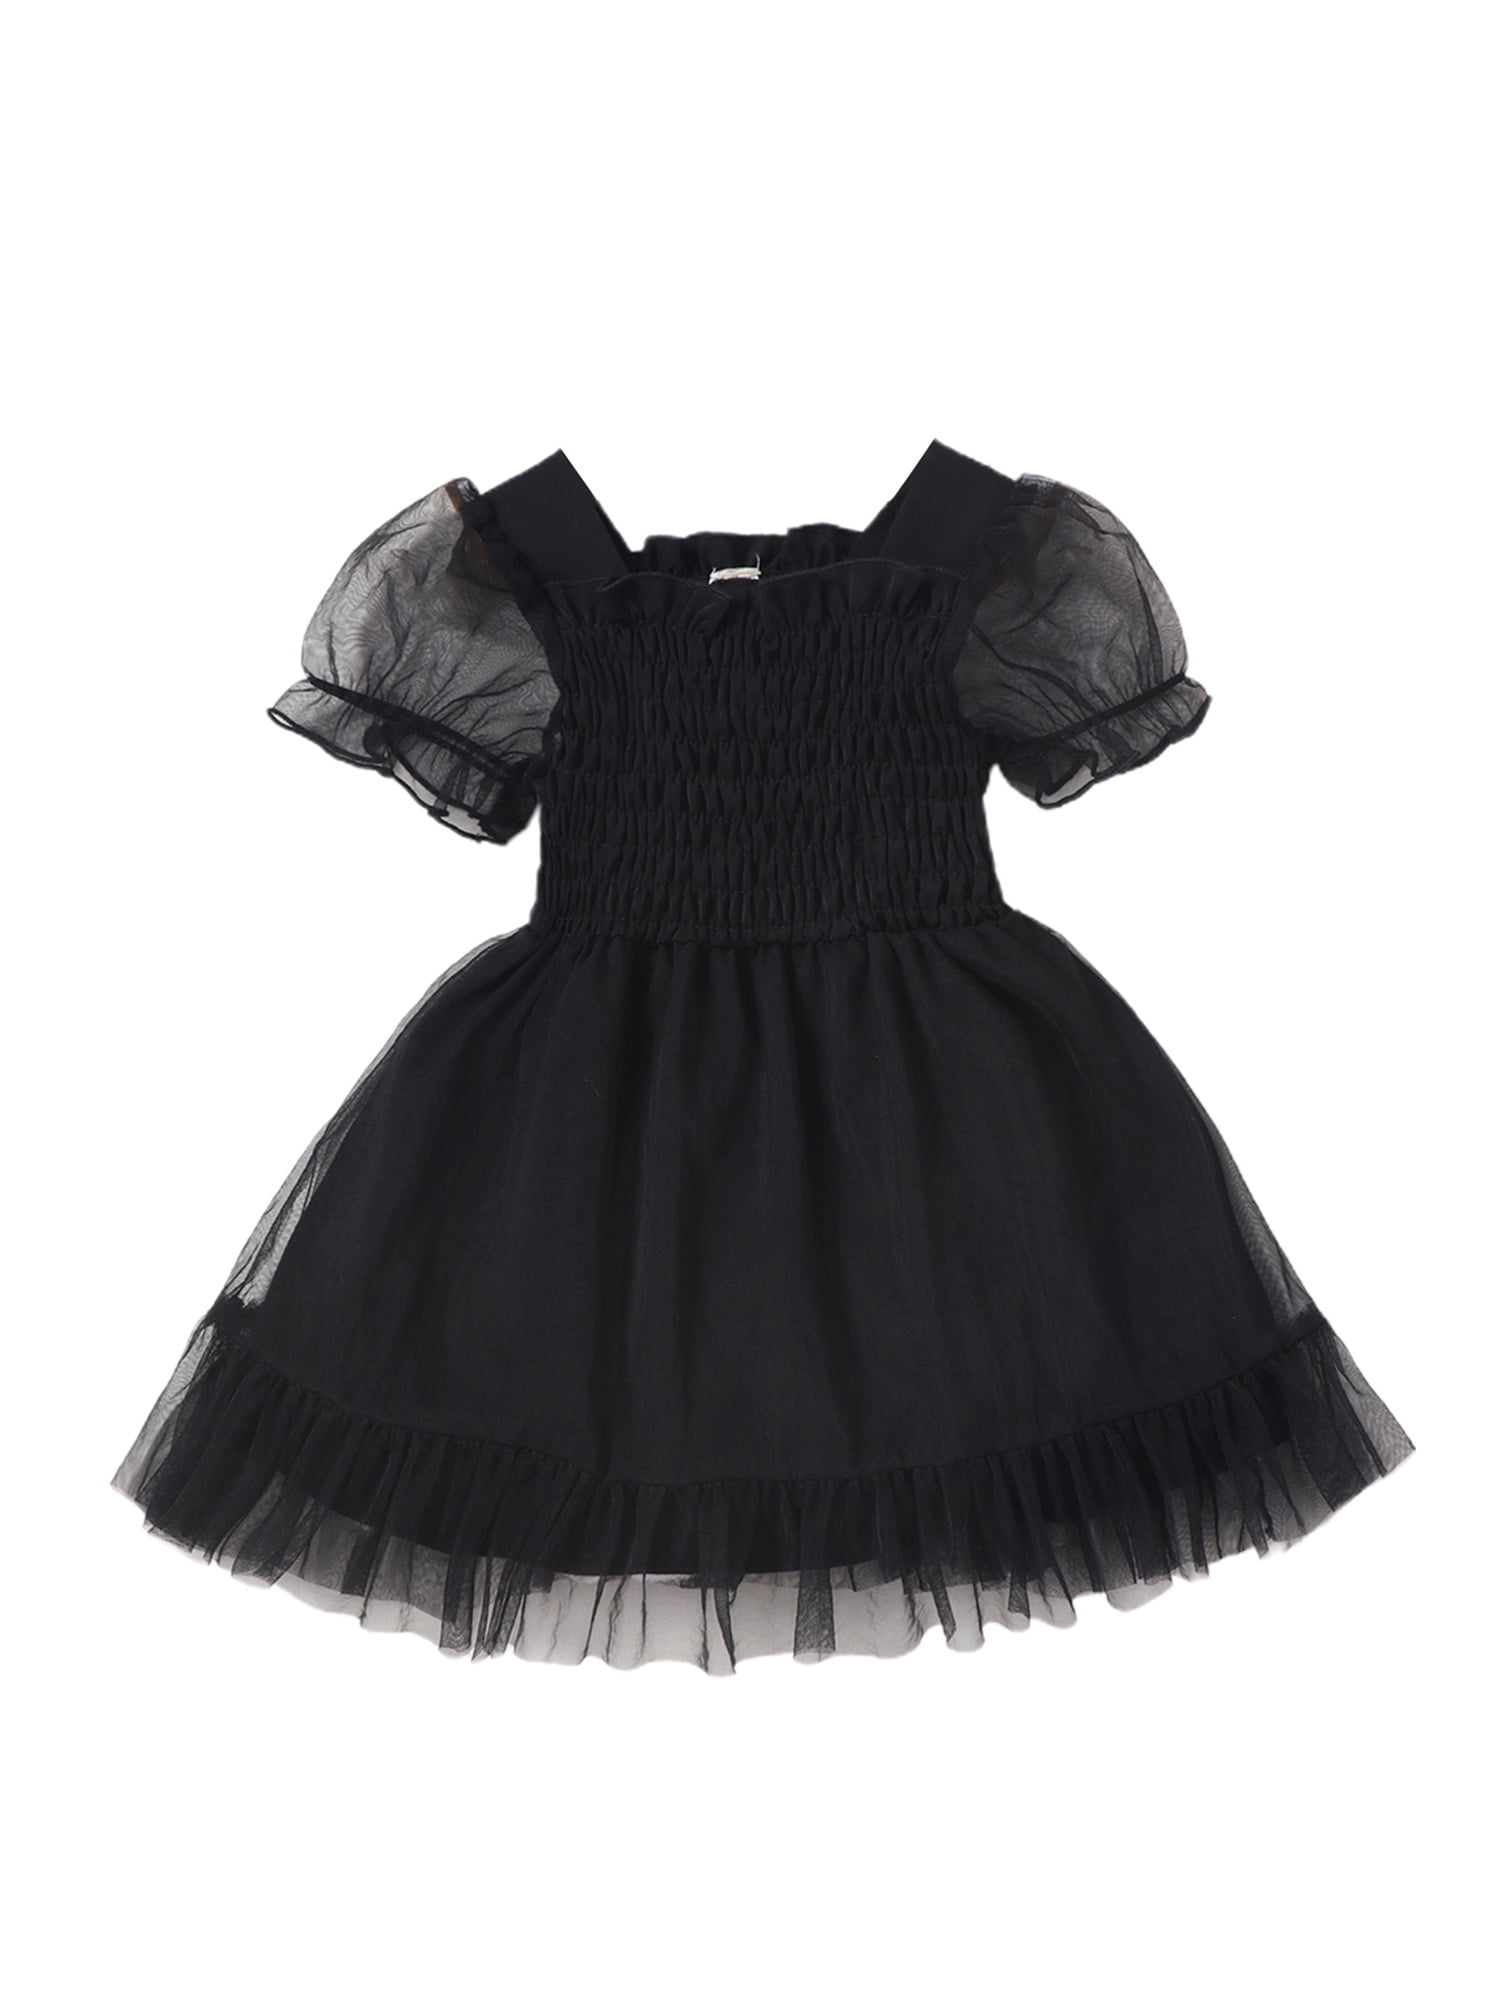 CenturyX Baby Girls Black Princess Dress Short Puff Sleeve Solid Color ...